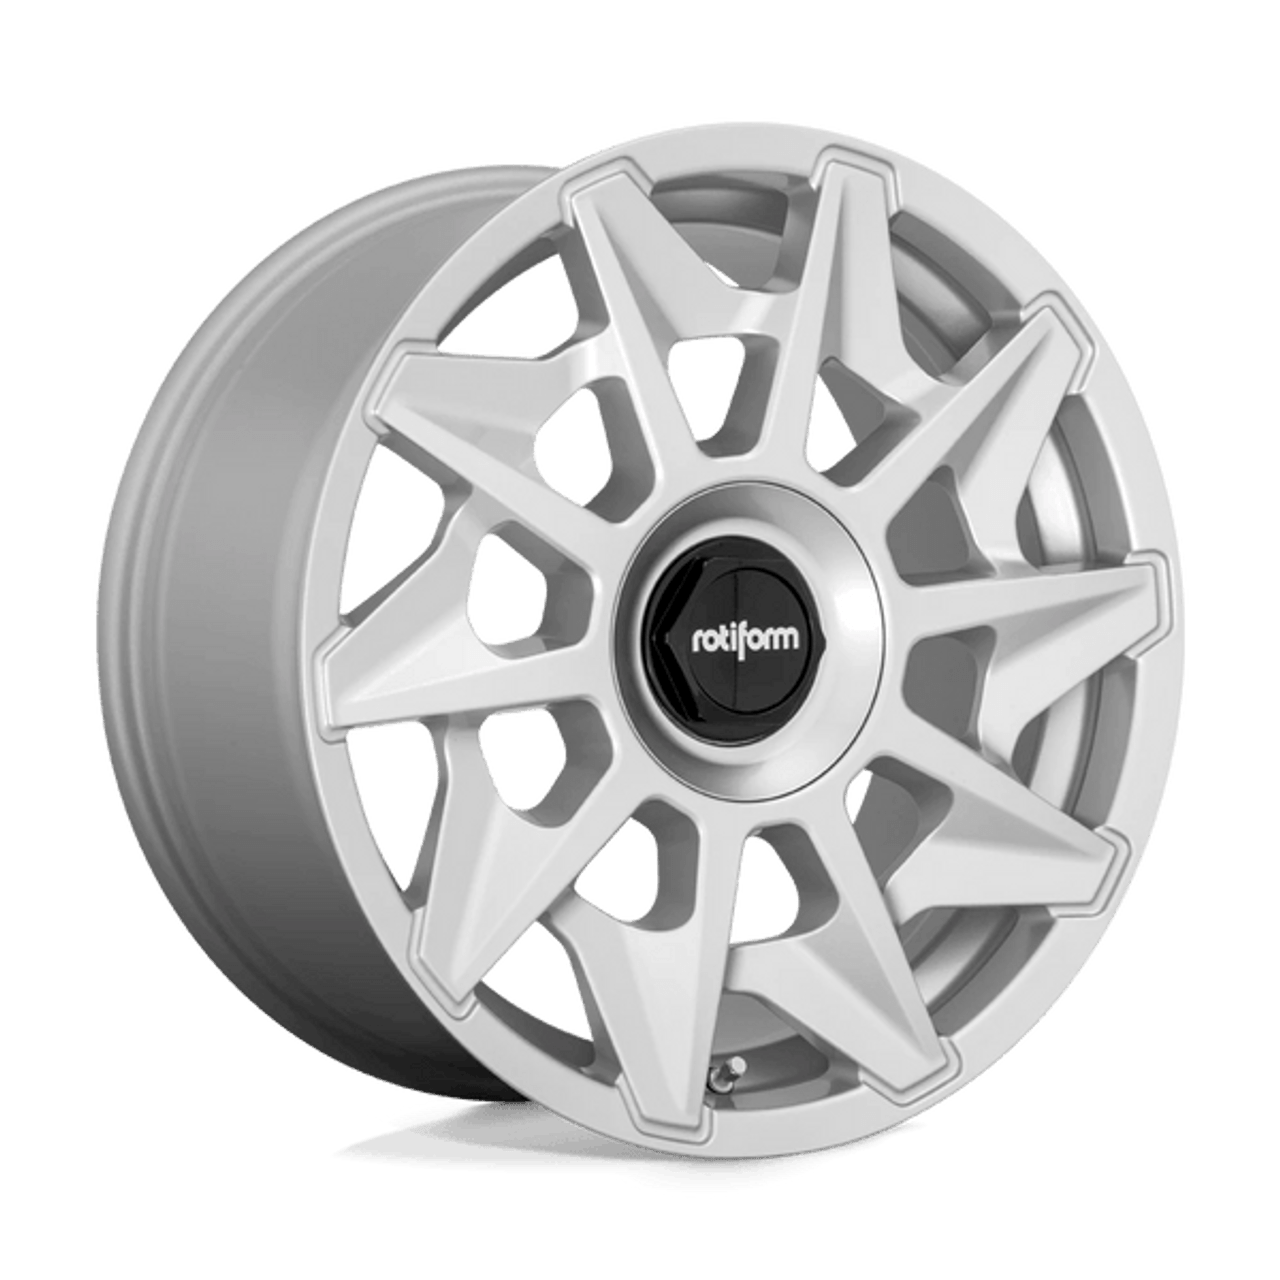 Rotiform R124 CVT Wheel 19x8.5 Blank 35 Offset - Gloss Silver